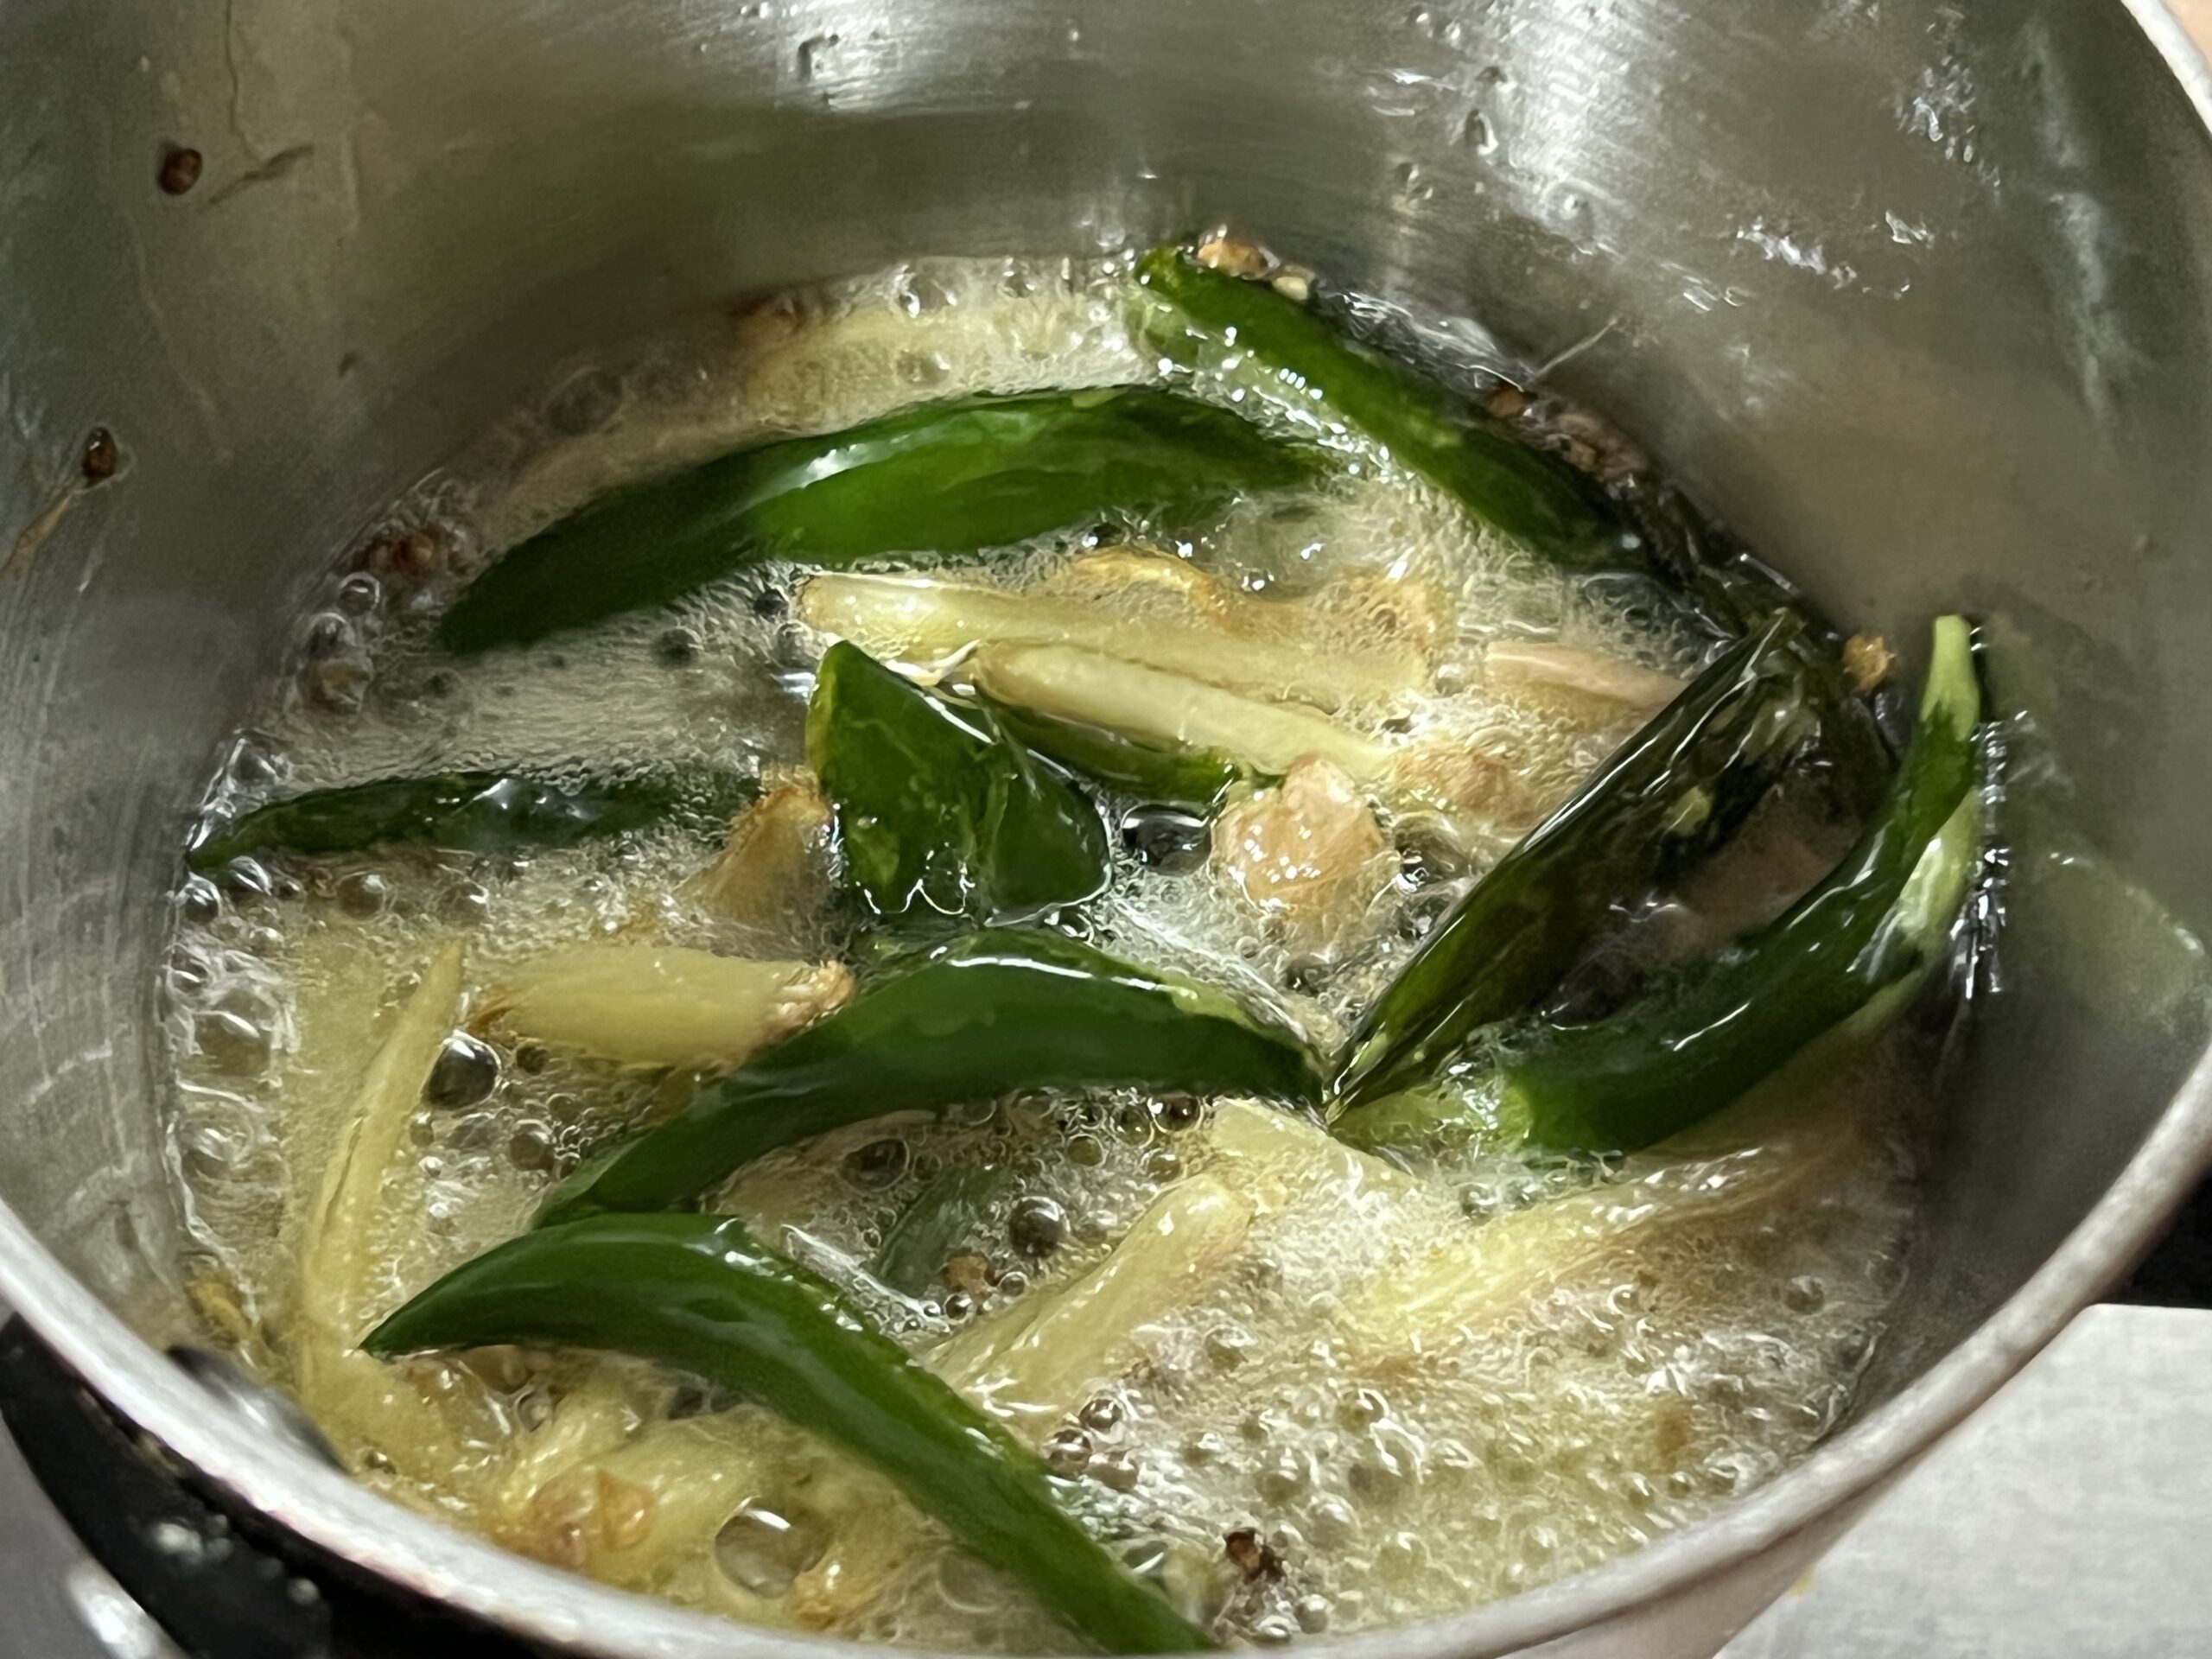 Dhaba Style Chicken Recipe